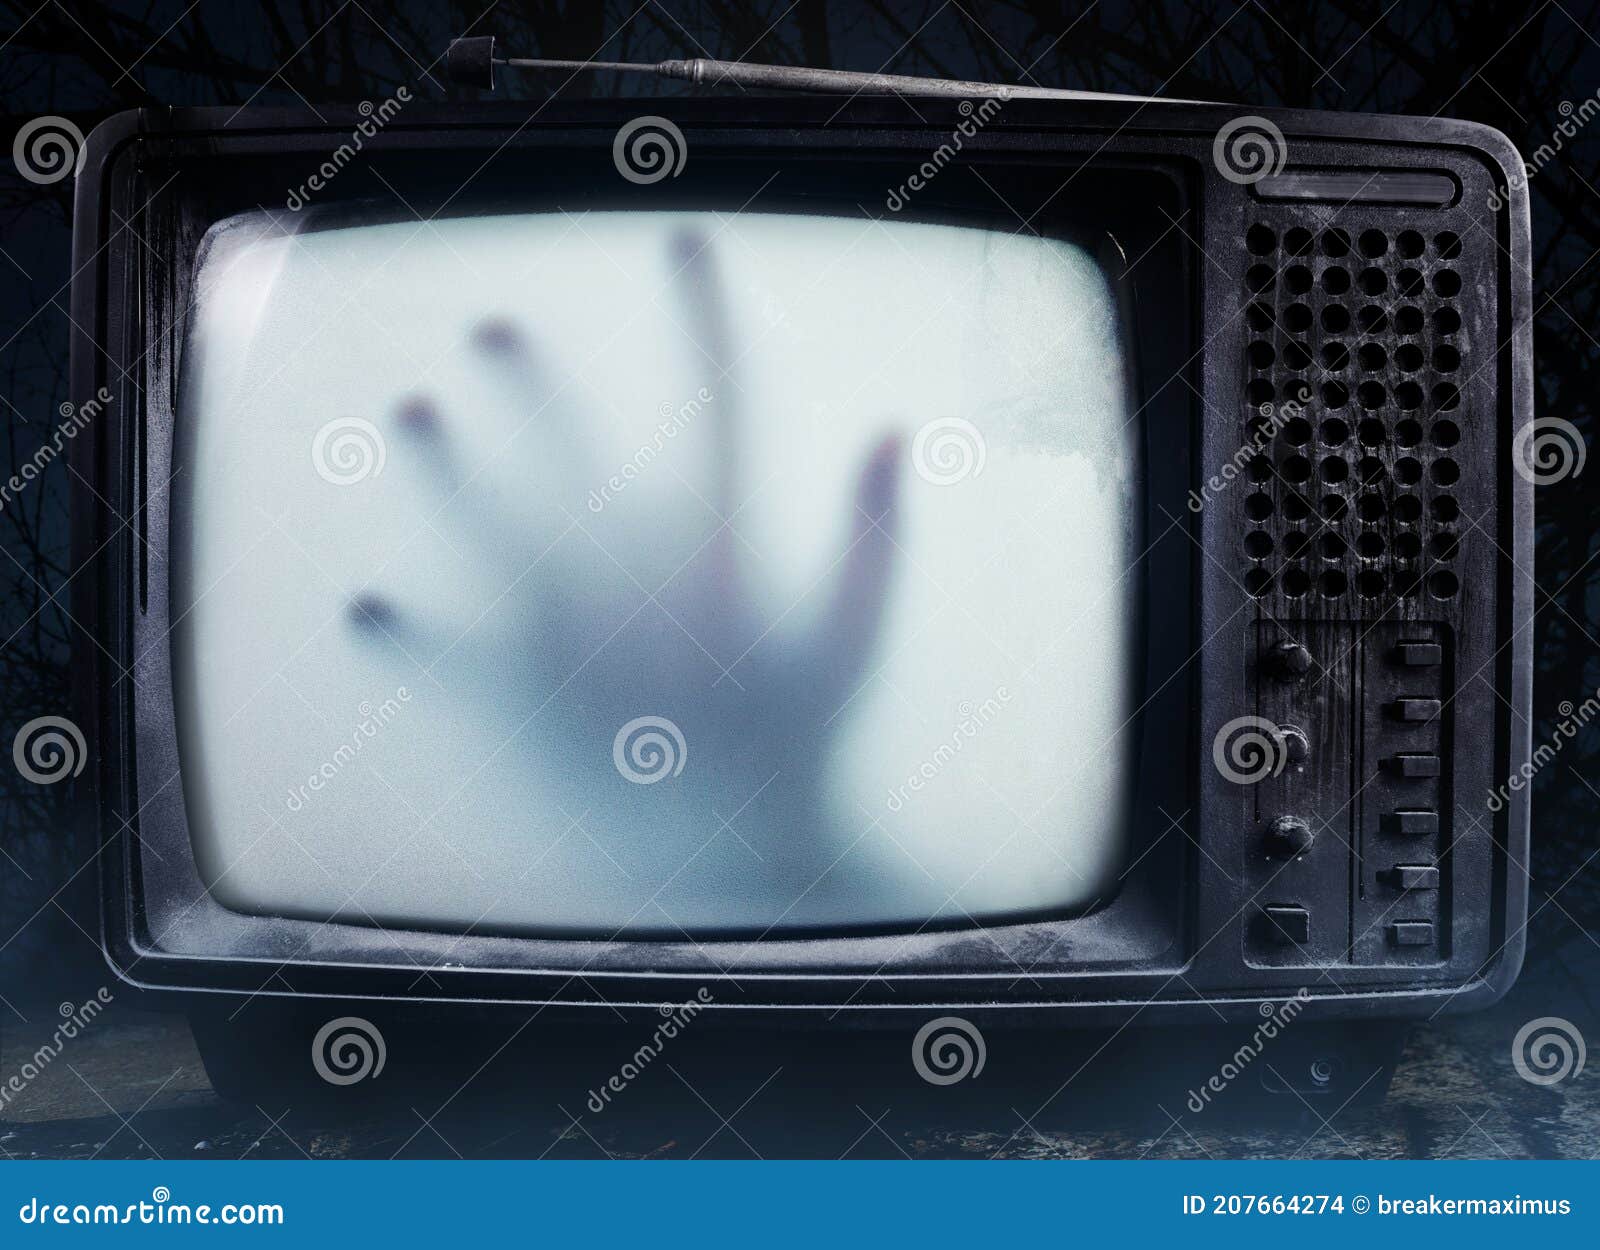 horror tv set on dark background